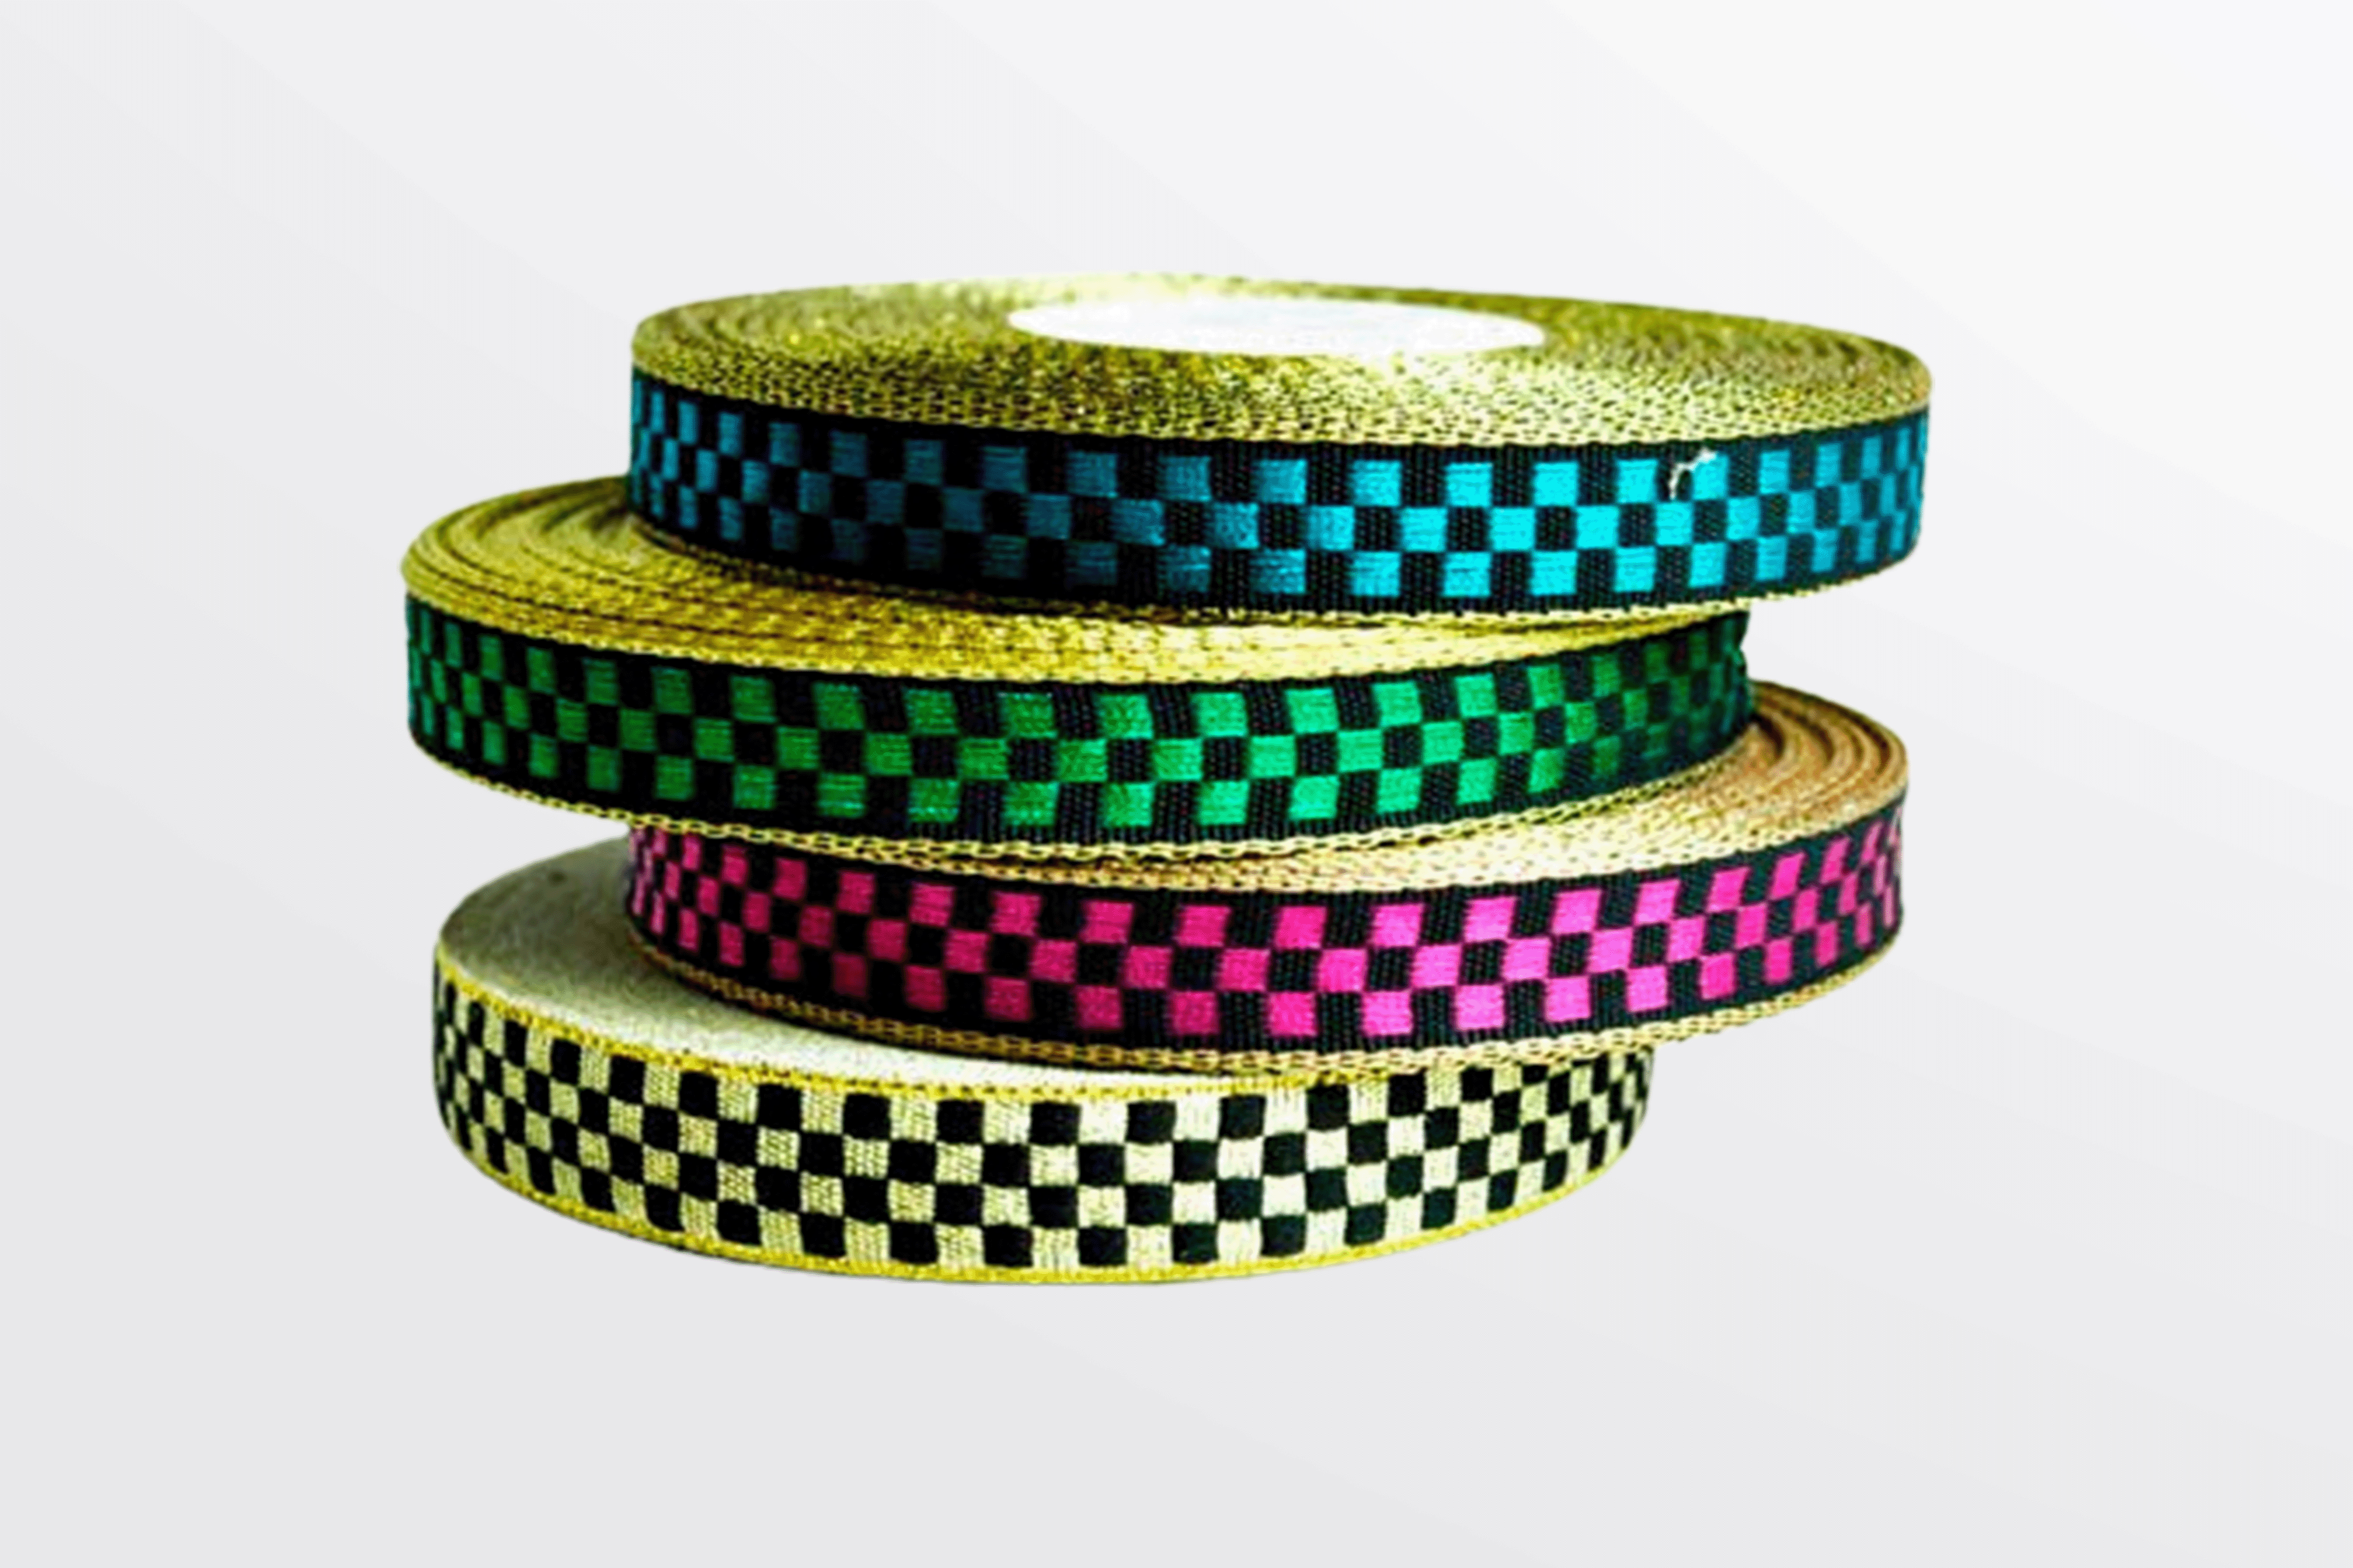 Ribbon Metallic Chess | Metallic Chess Pattern Ribbon | Sophisticated Design for Crafts